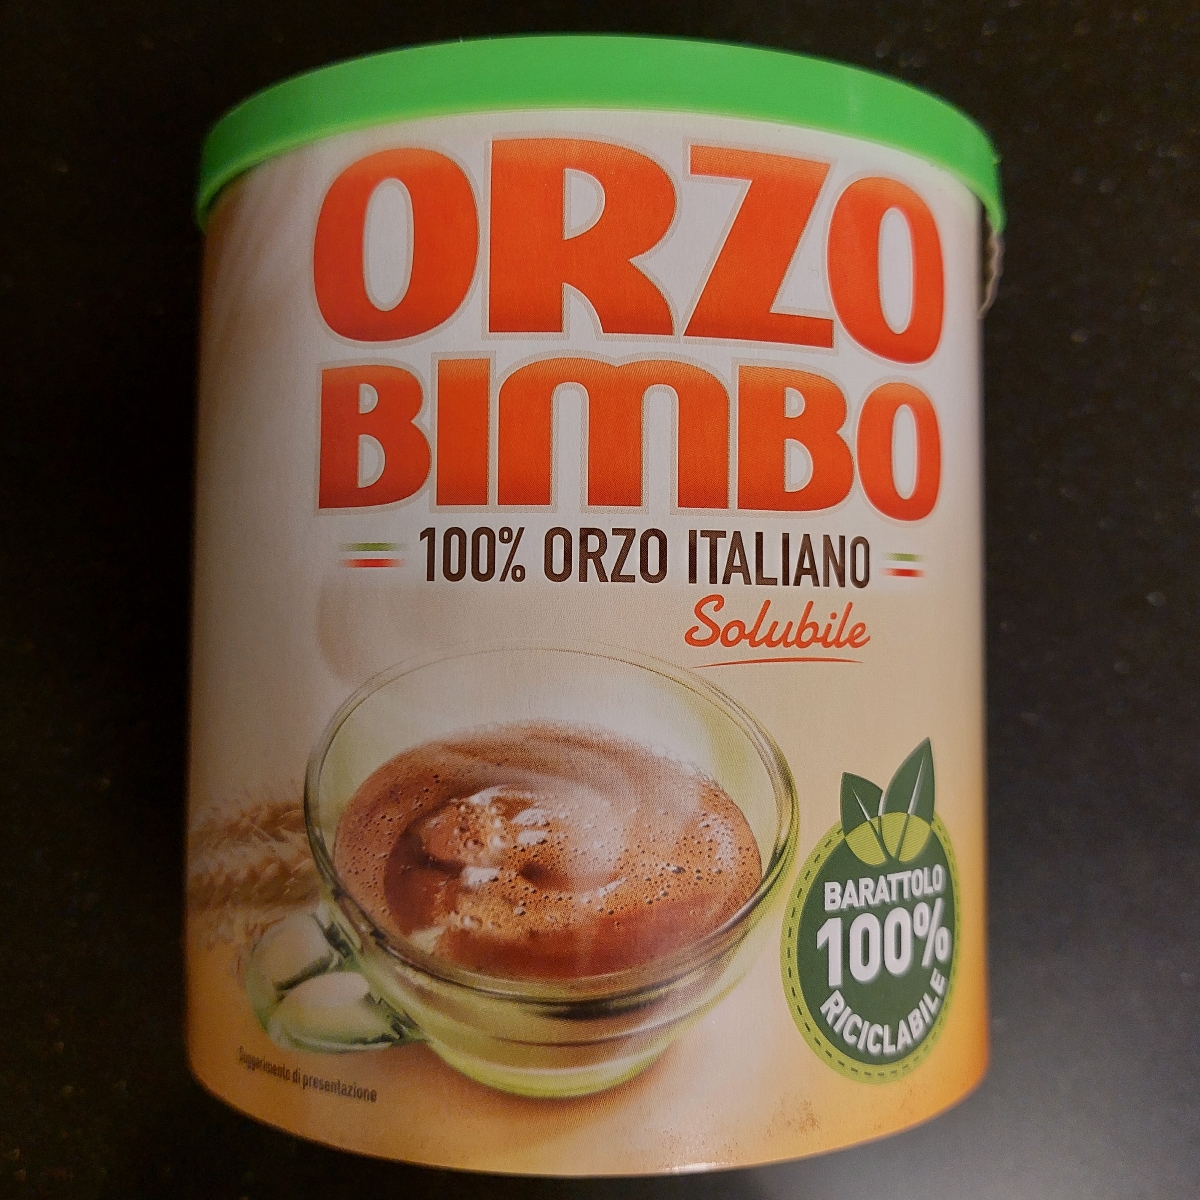 Orzo Bimbo Orzo italiano solubile Review